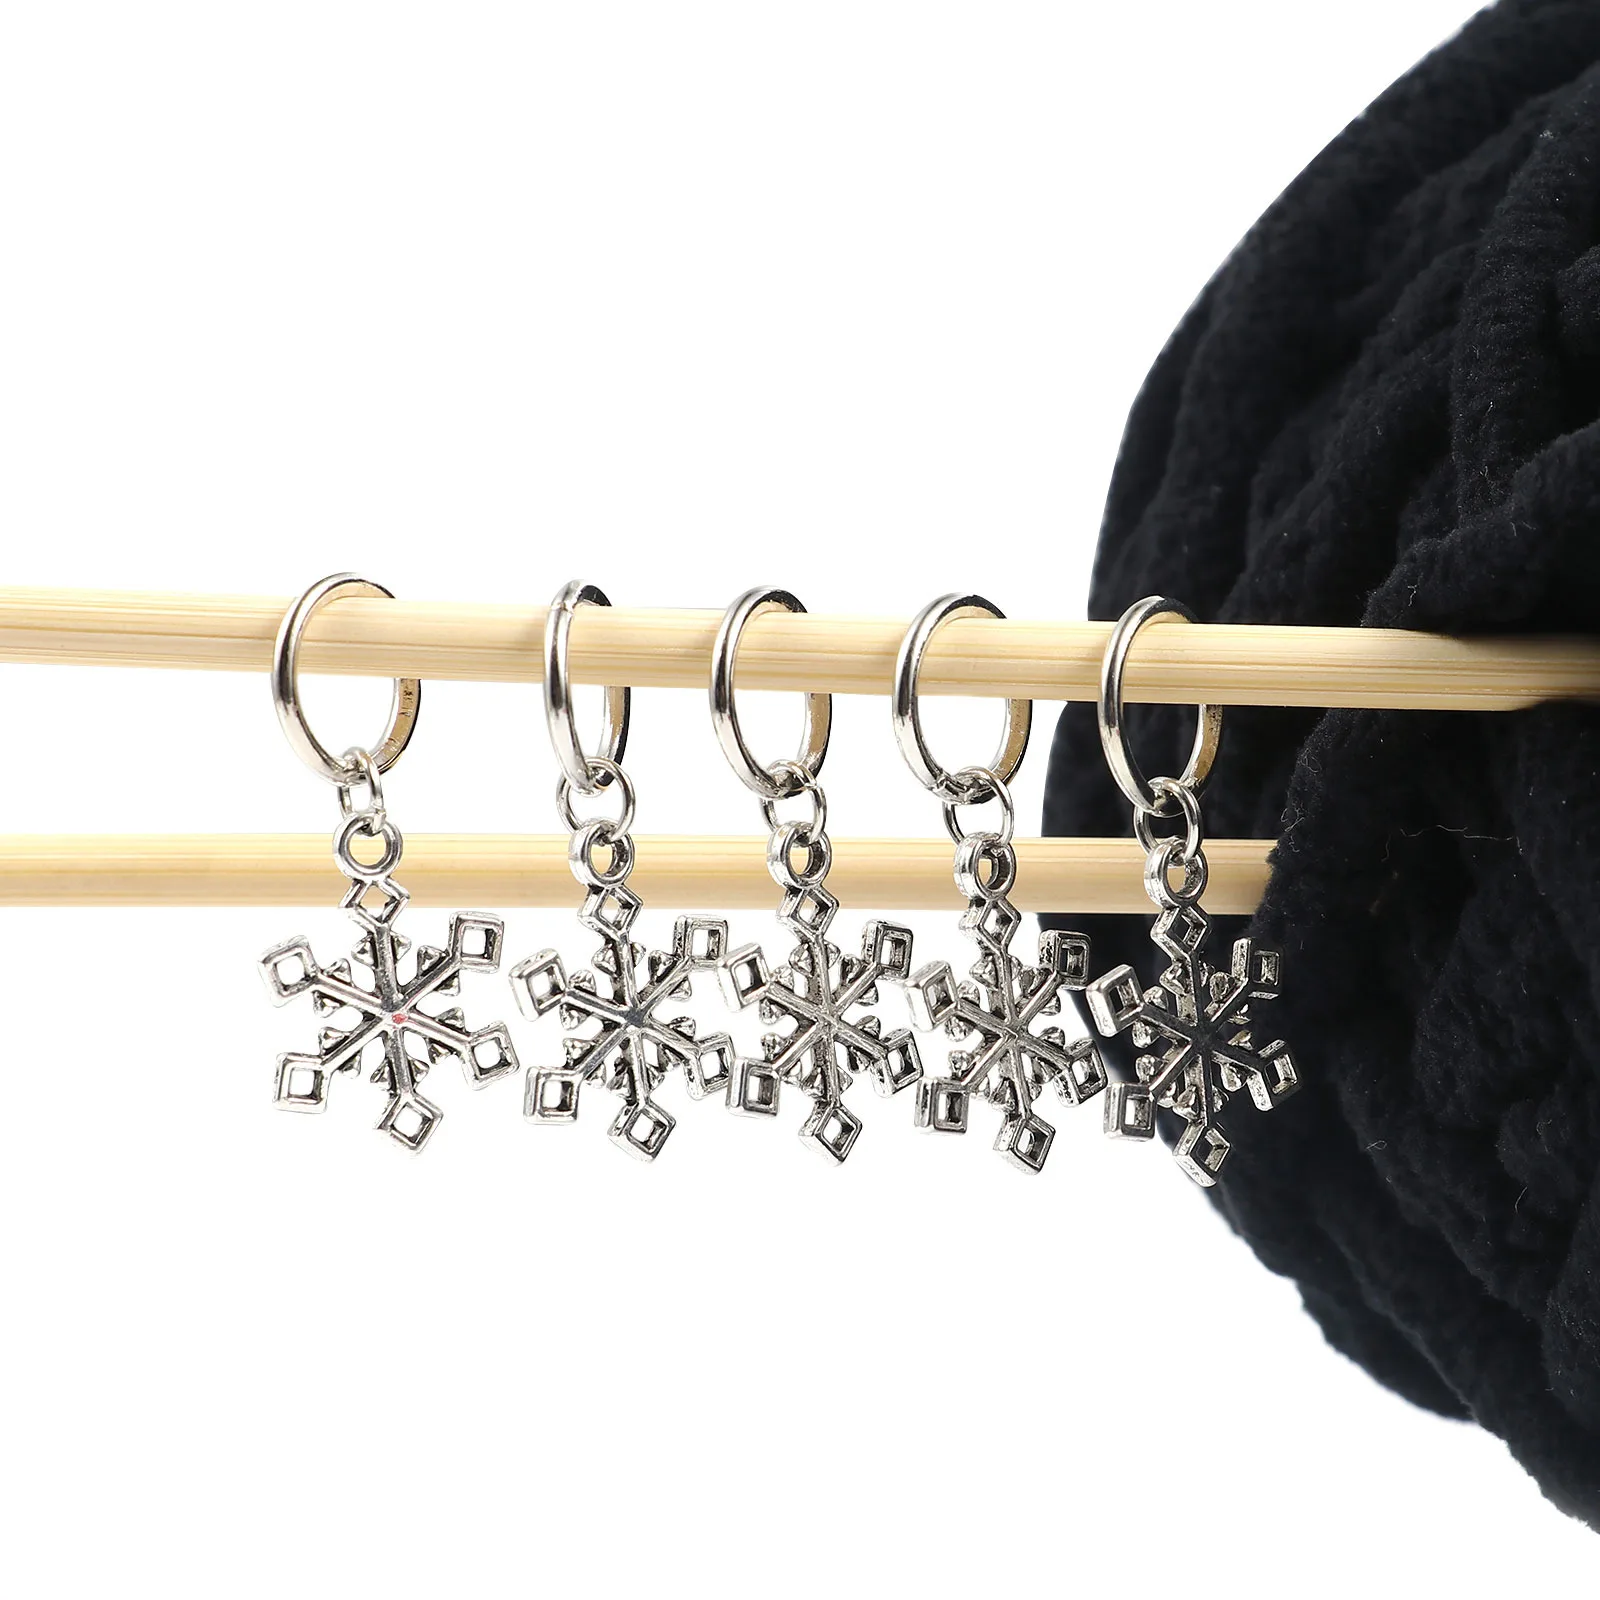 10 Piece Homemade Lampwork Mixed Glass Knitting Stitch Markers Lock Needlework Accessories DIY Handmade Sewing Supplies